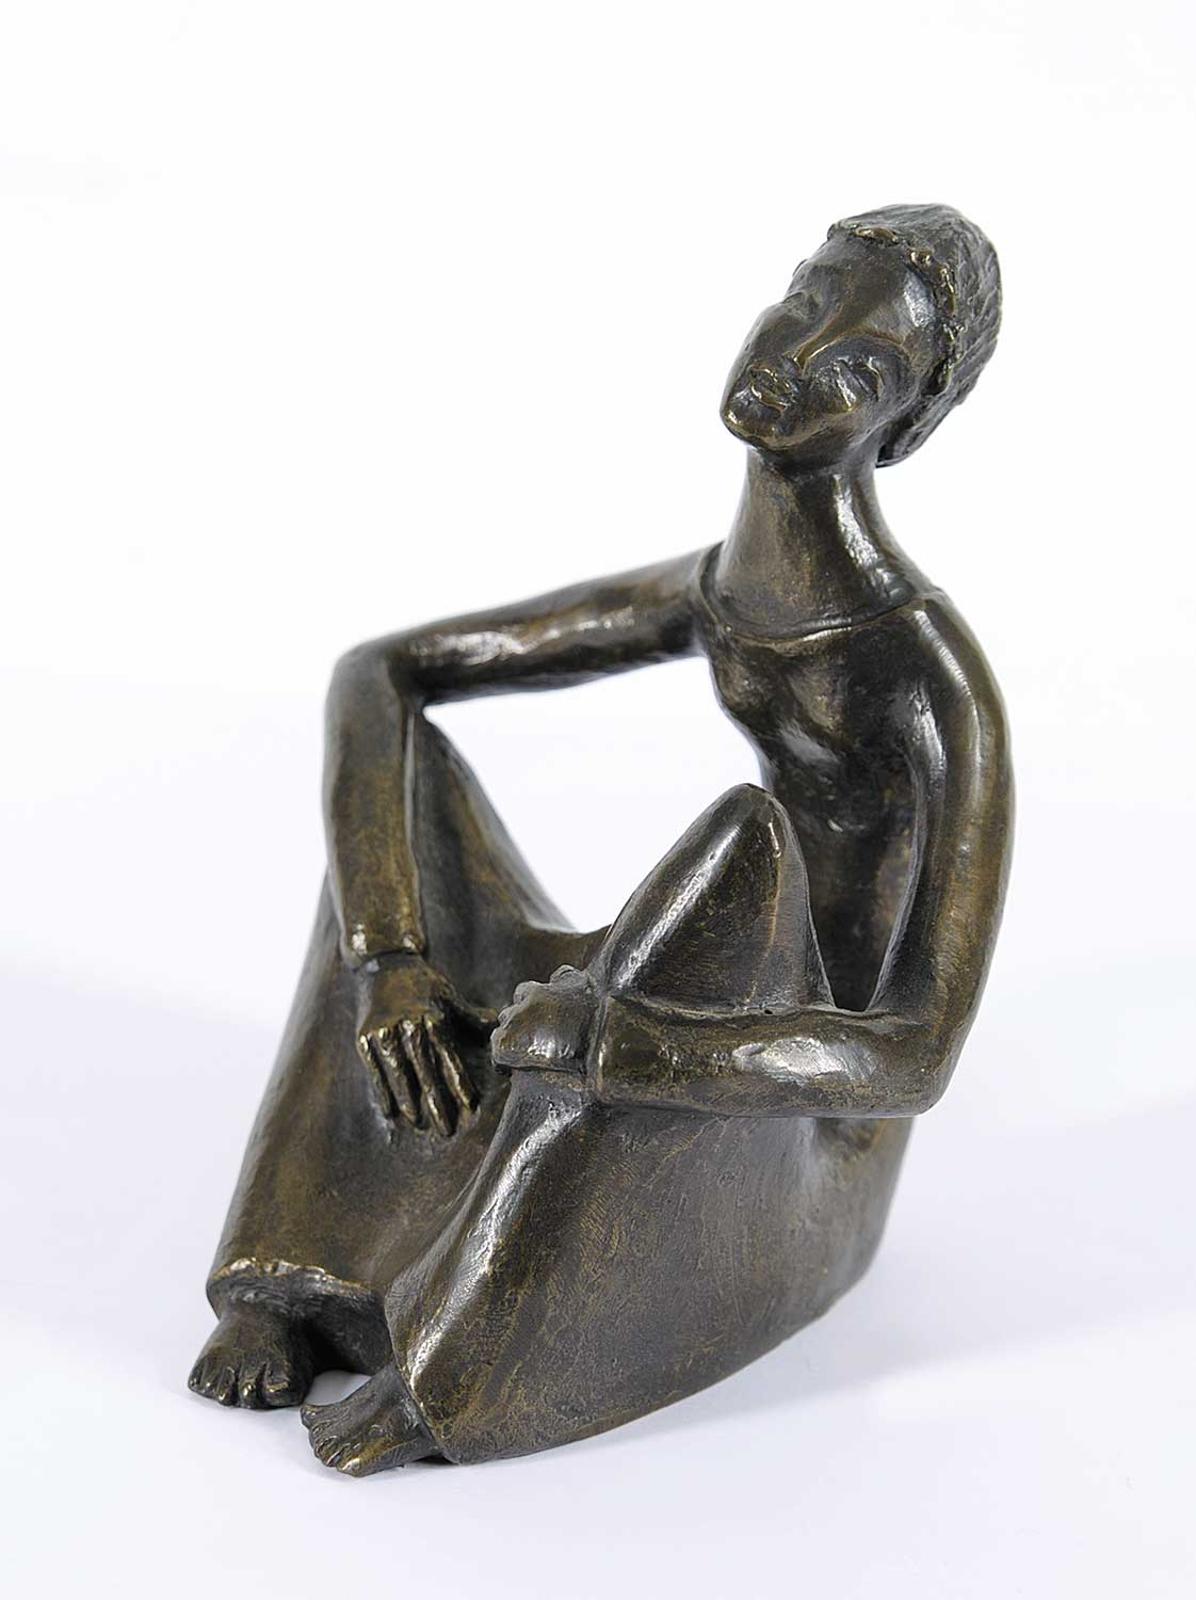 Maria Rahmer de Nagay - Untitled - Seated Girl